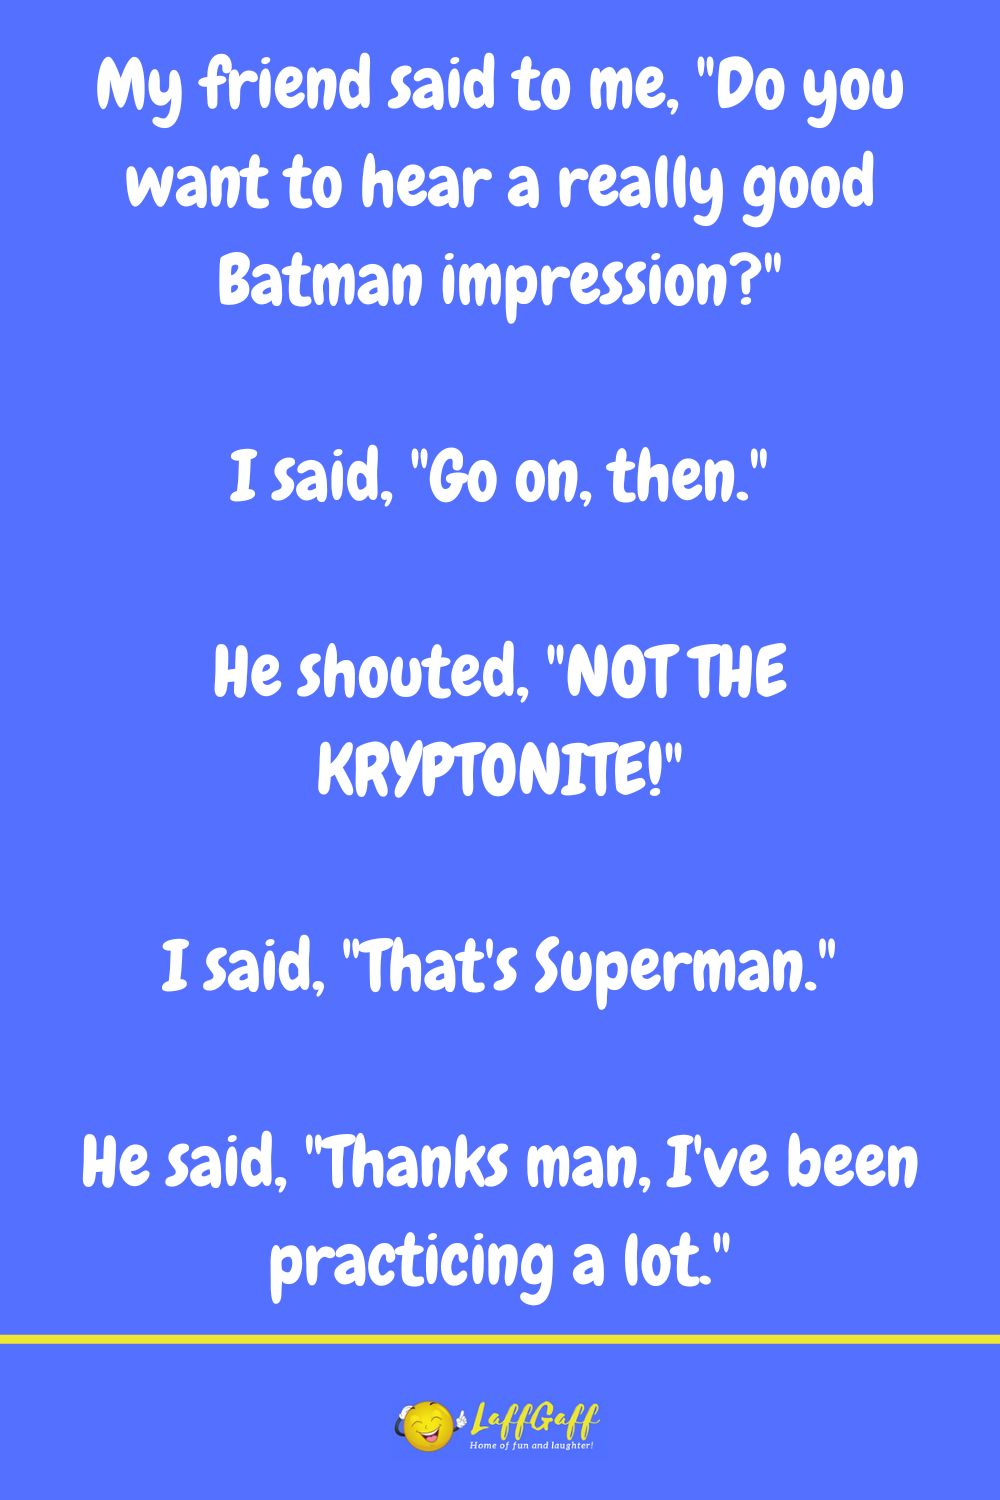 Batman impression joke from LaffGaff.